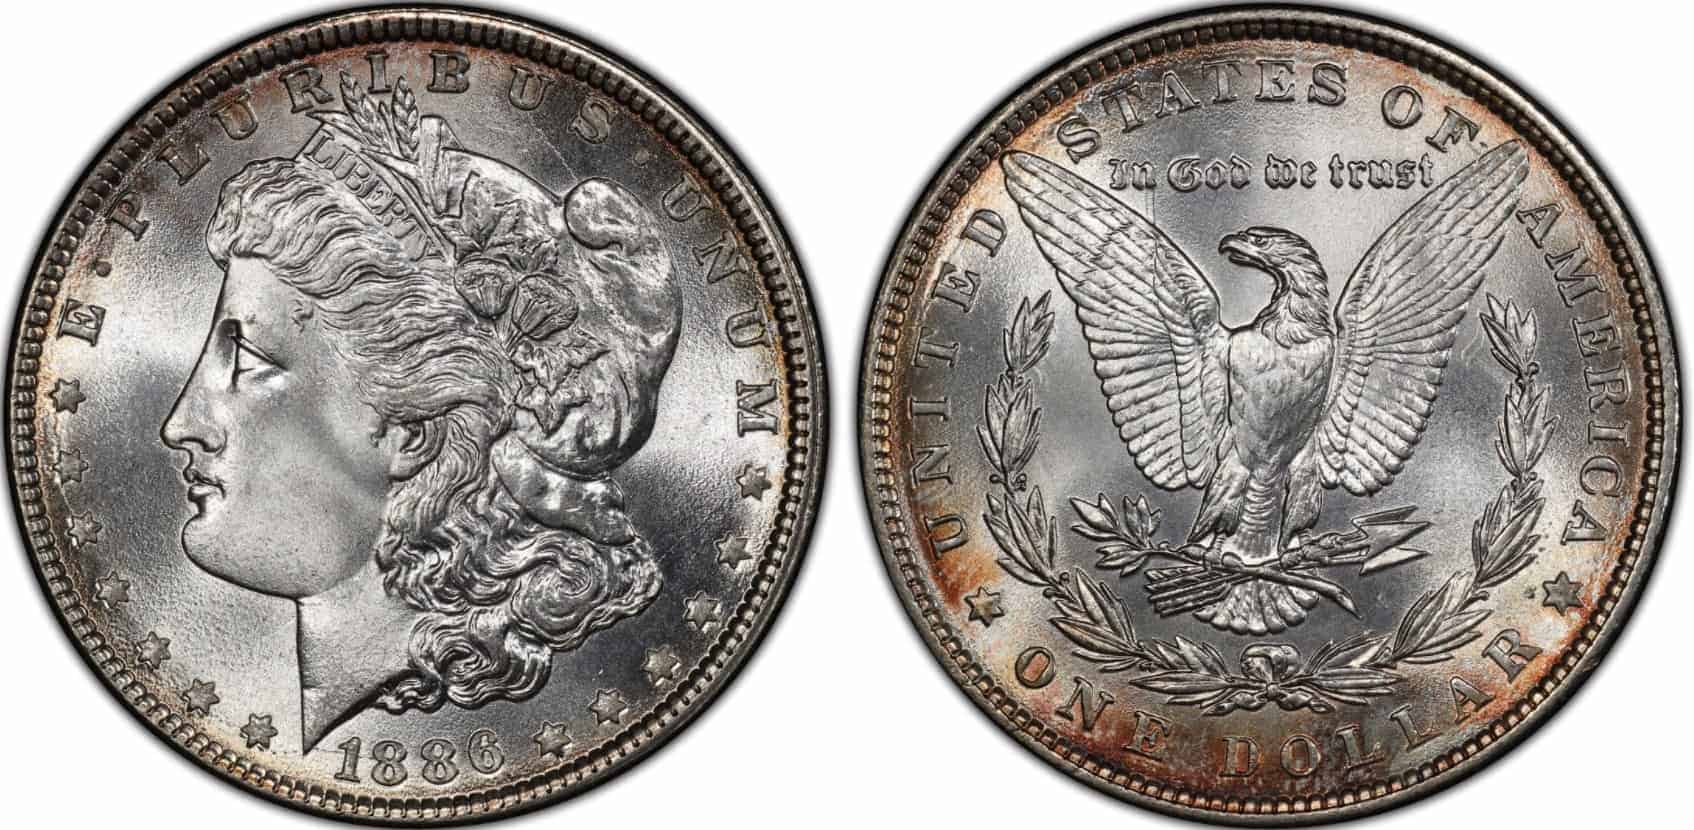 1886 Proof (P) No Mint Mark Silver Dollar